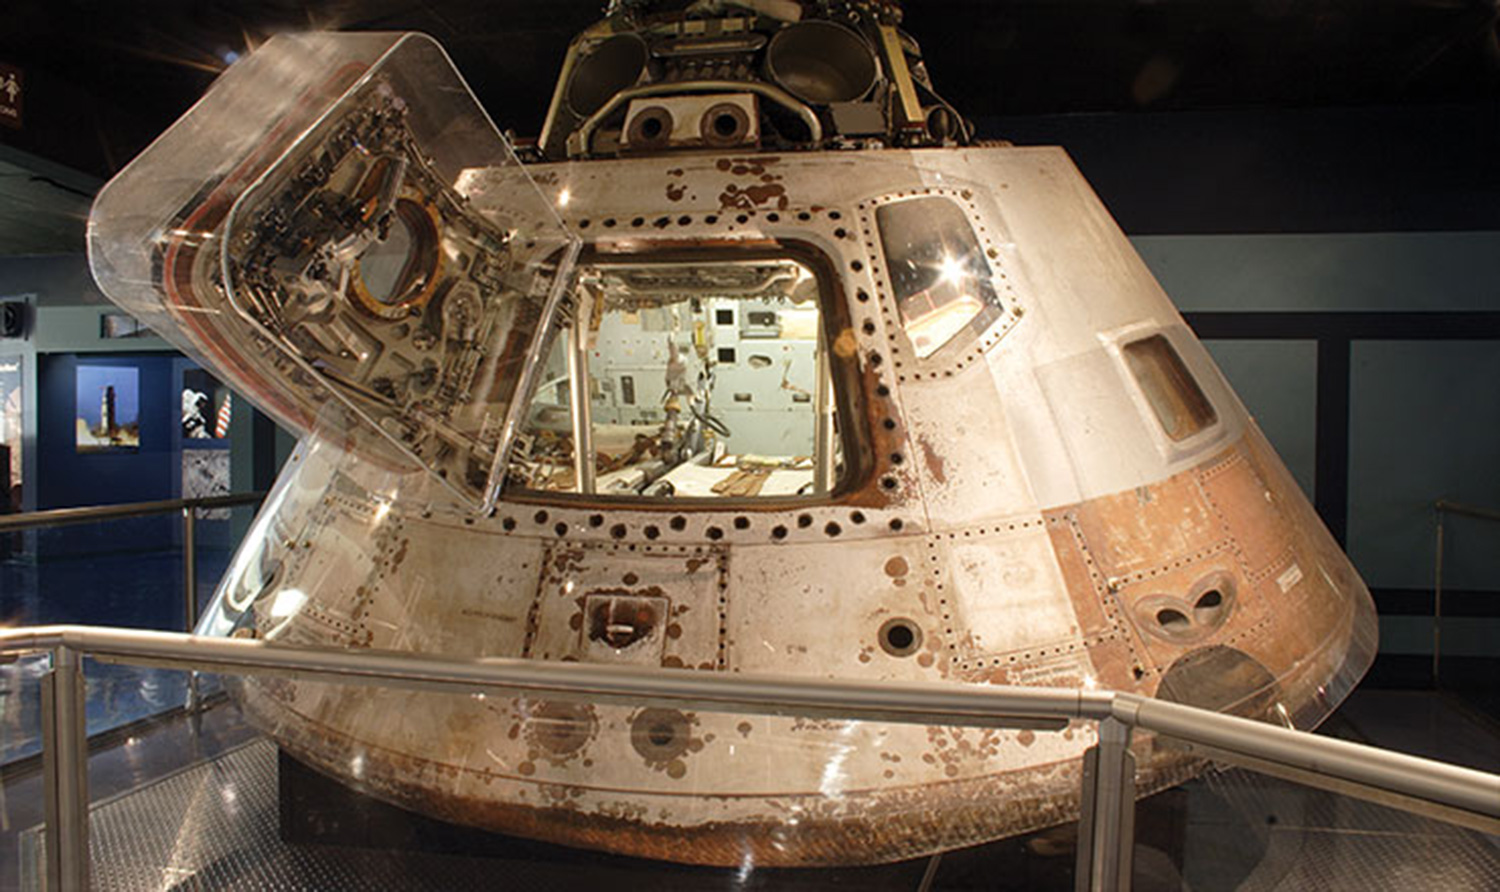 The Skylab 2 Command Module